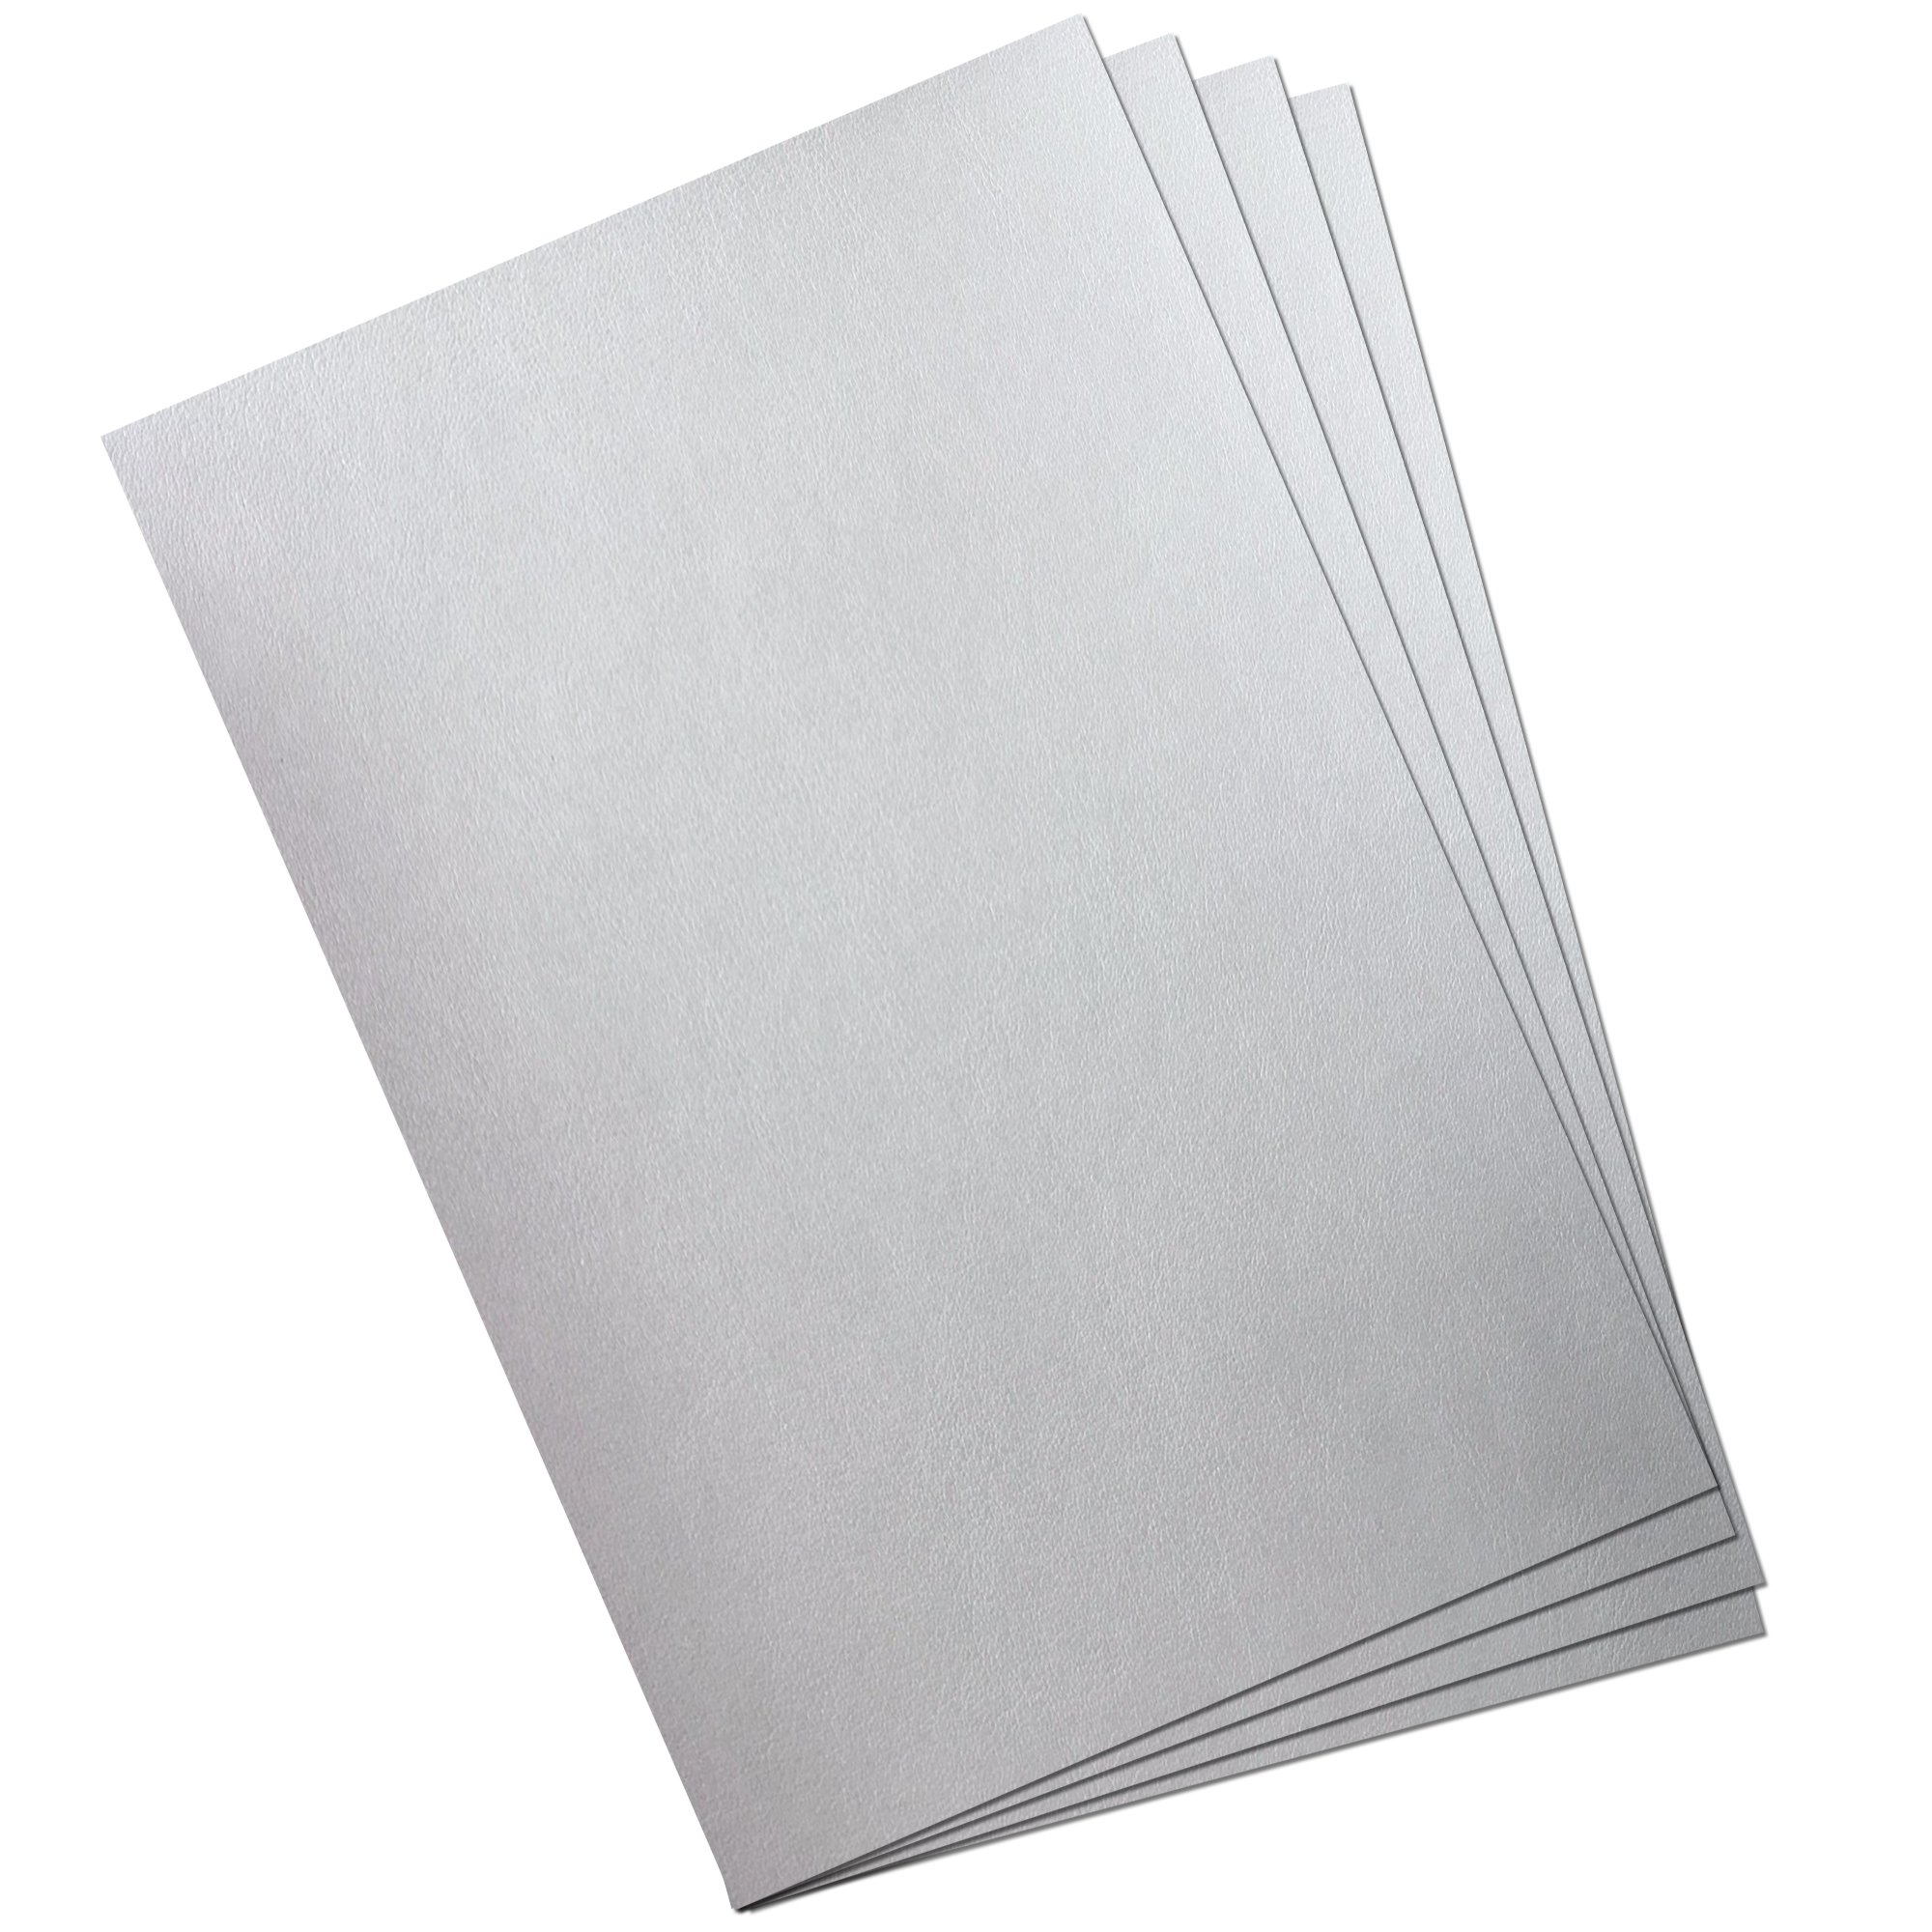 Mopak Resim Kağıdı Dokusuz 110gr 35x50cm 100lü Paket